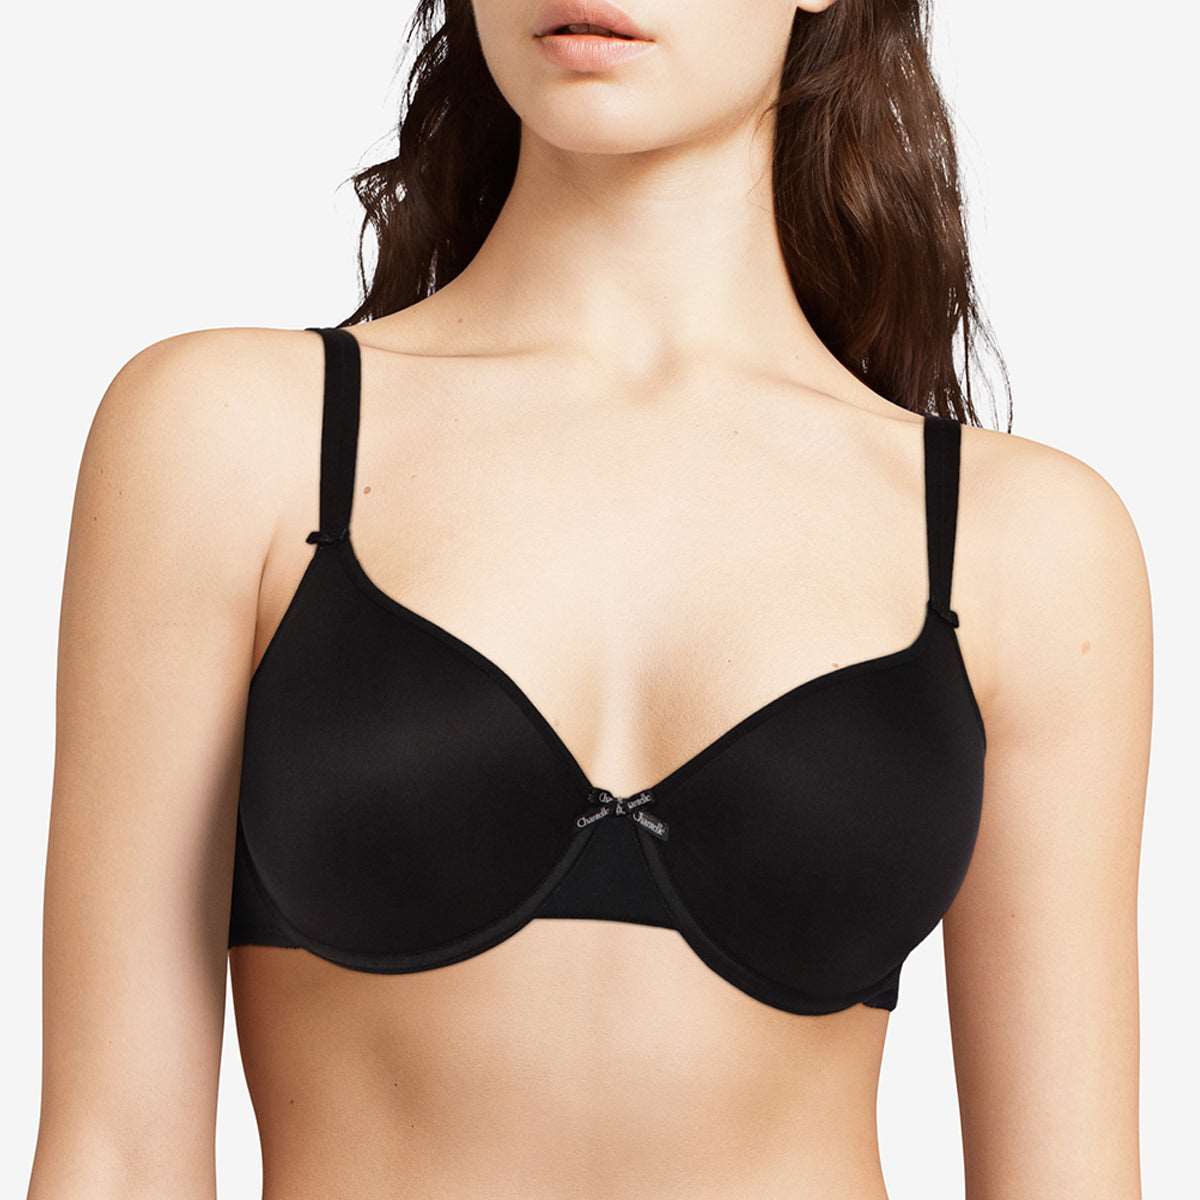 Chantelle bra basic invisible 1241 black bras underwire how should a bra fit lingerie canada linea intima